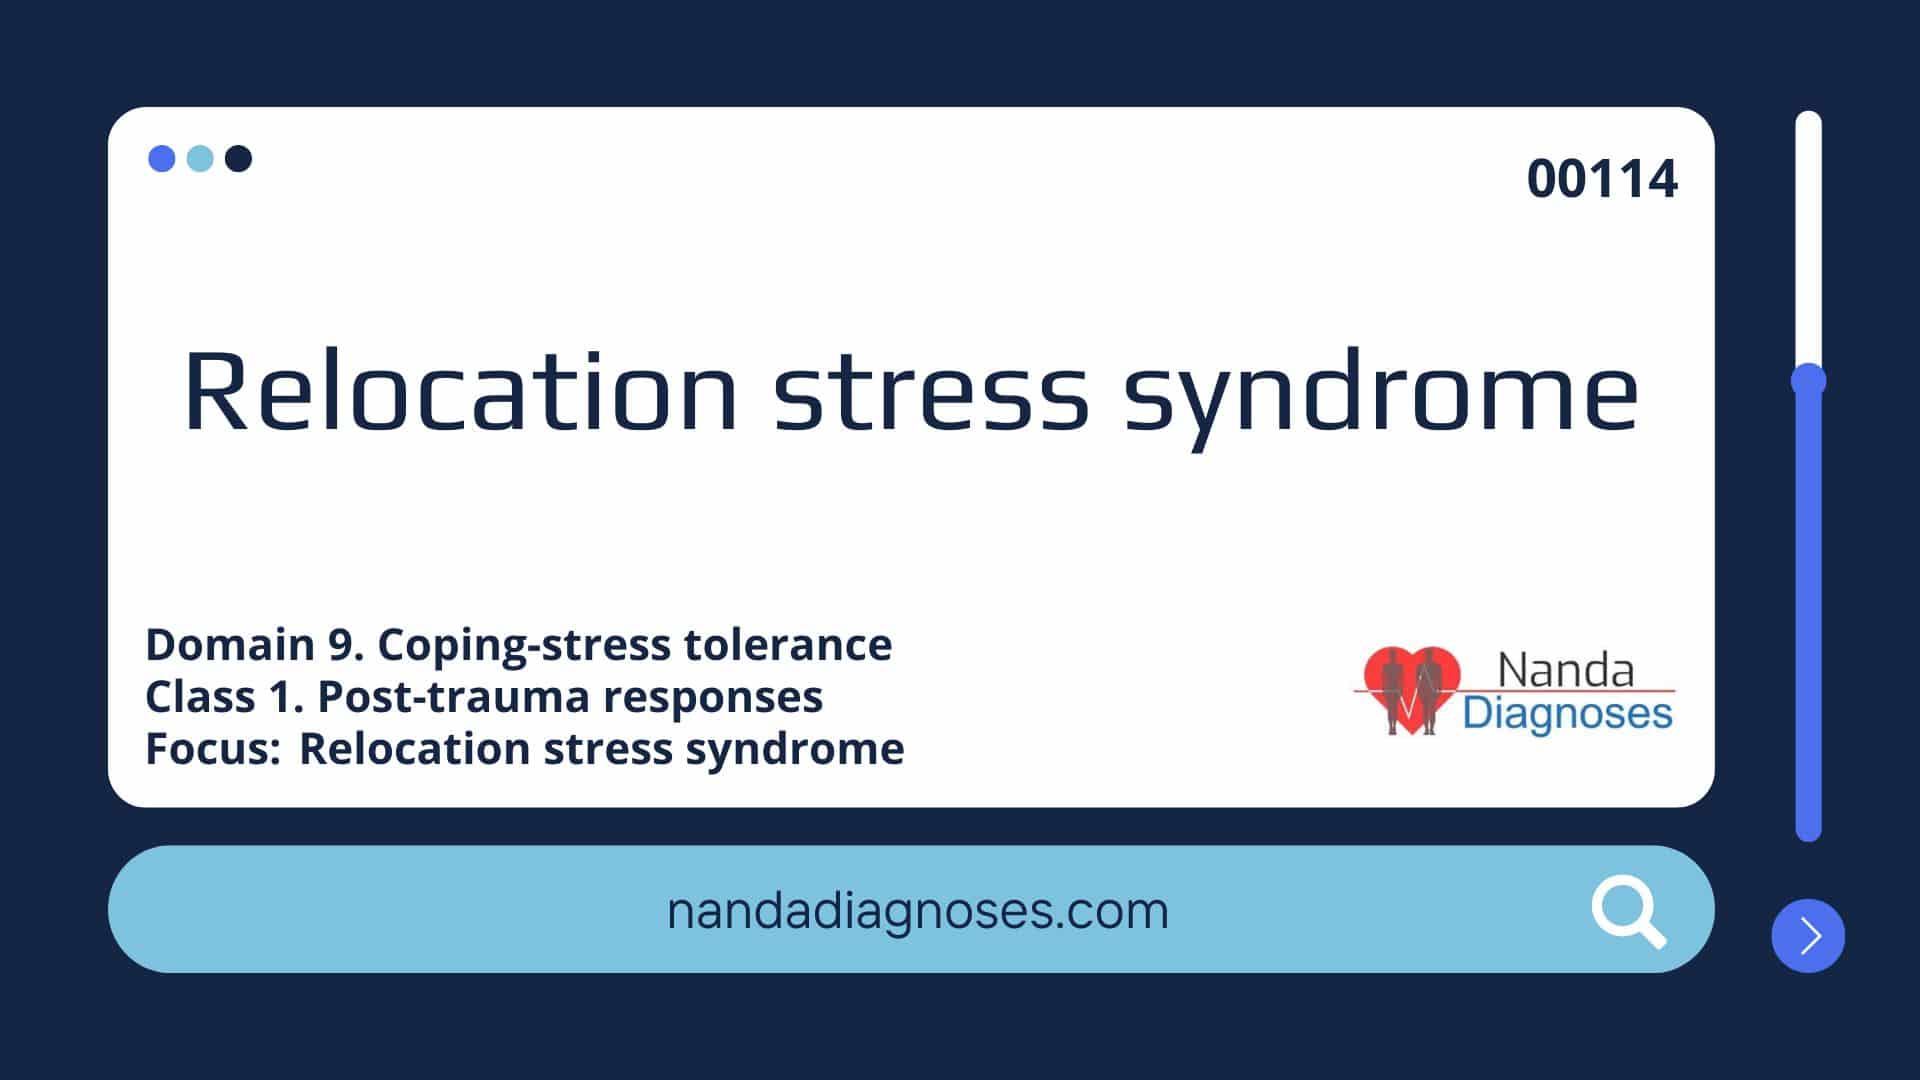 Nursing diagnosis Relocation stress syndrome